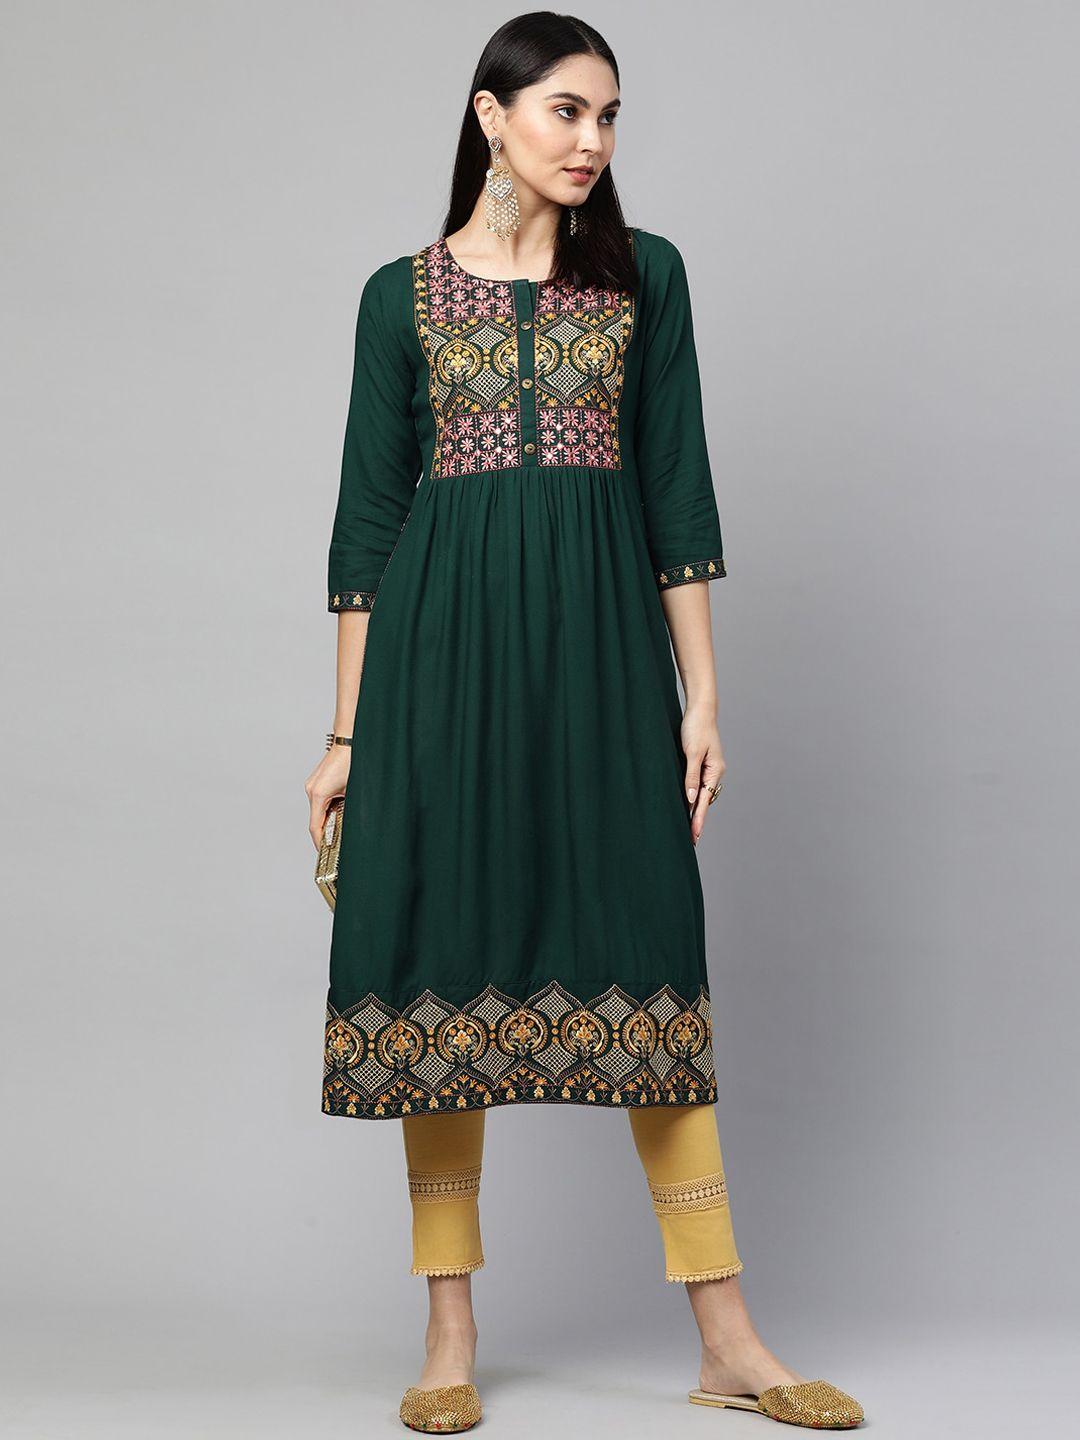 fashor women green & pink ethnic motifs yoke design thread work kurta